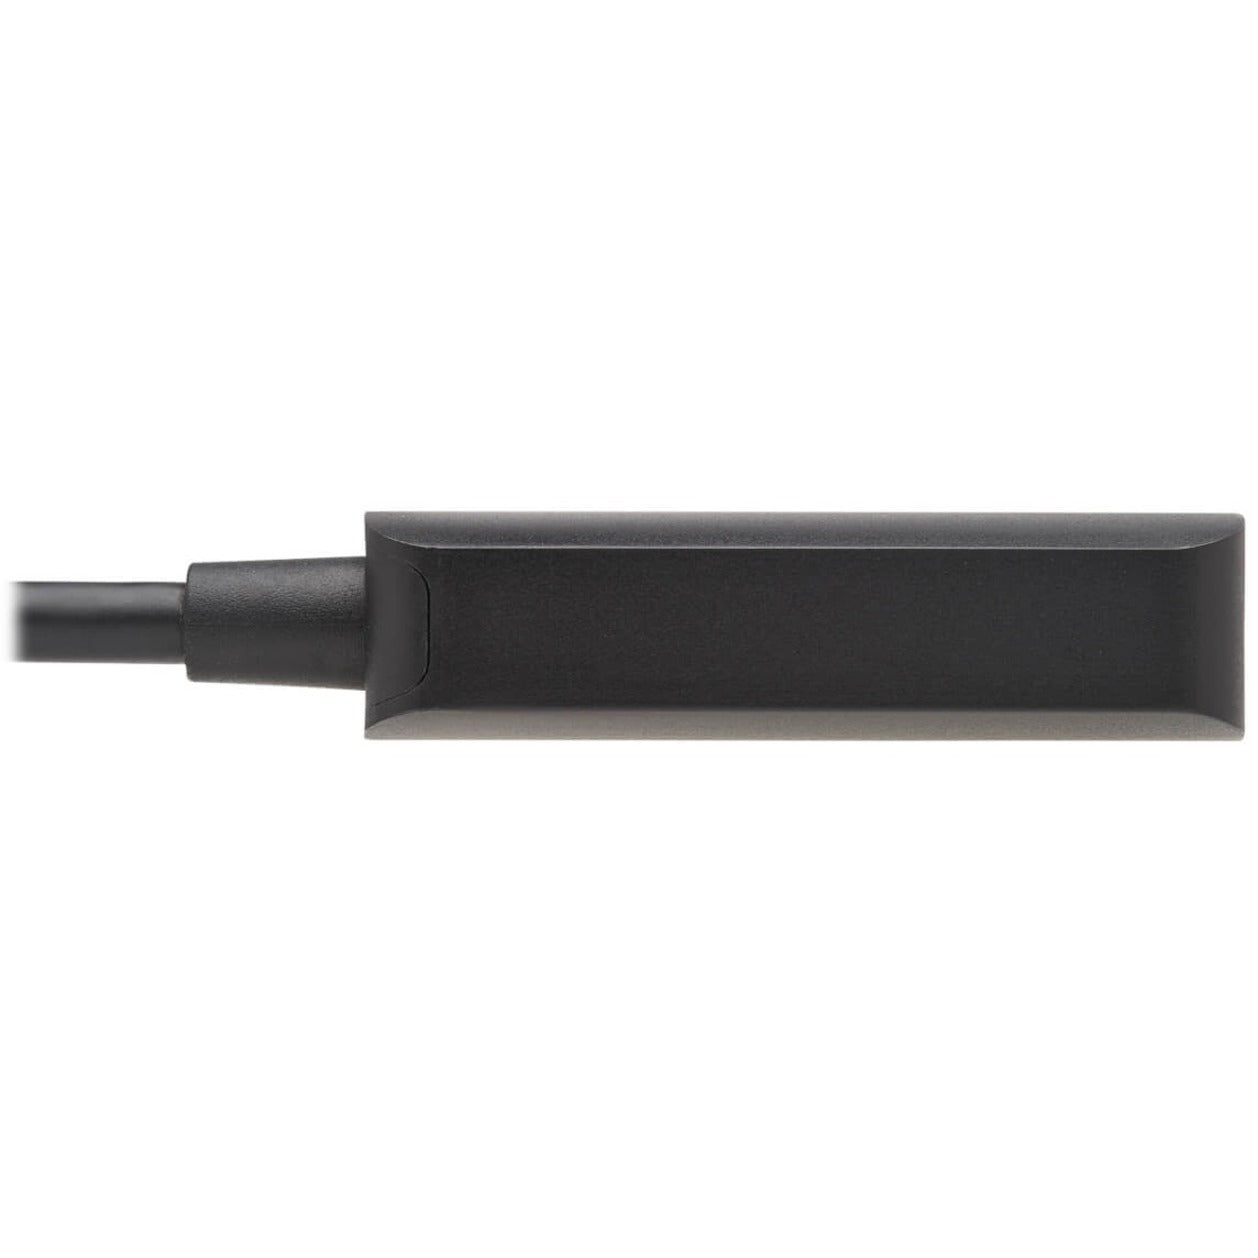 Tripp Lite U444-06N-HDR4-B USB-C to HDMI Adapter, 4K 60Hz, HDR, DP 1.4 Alt Mode, HDCP 2.2